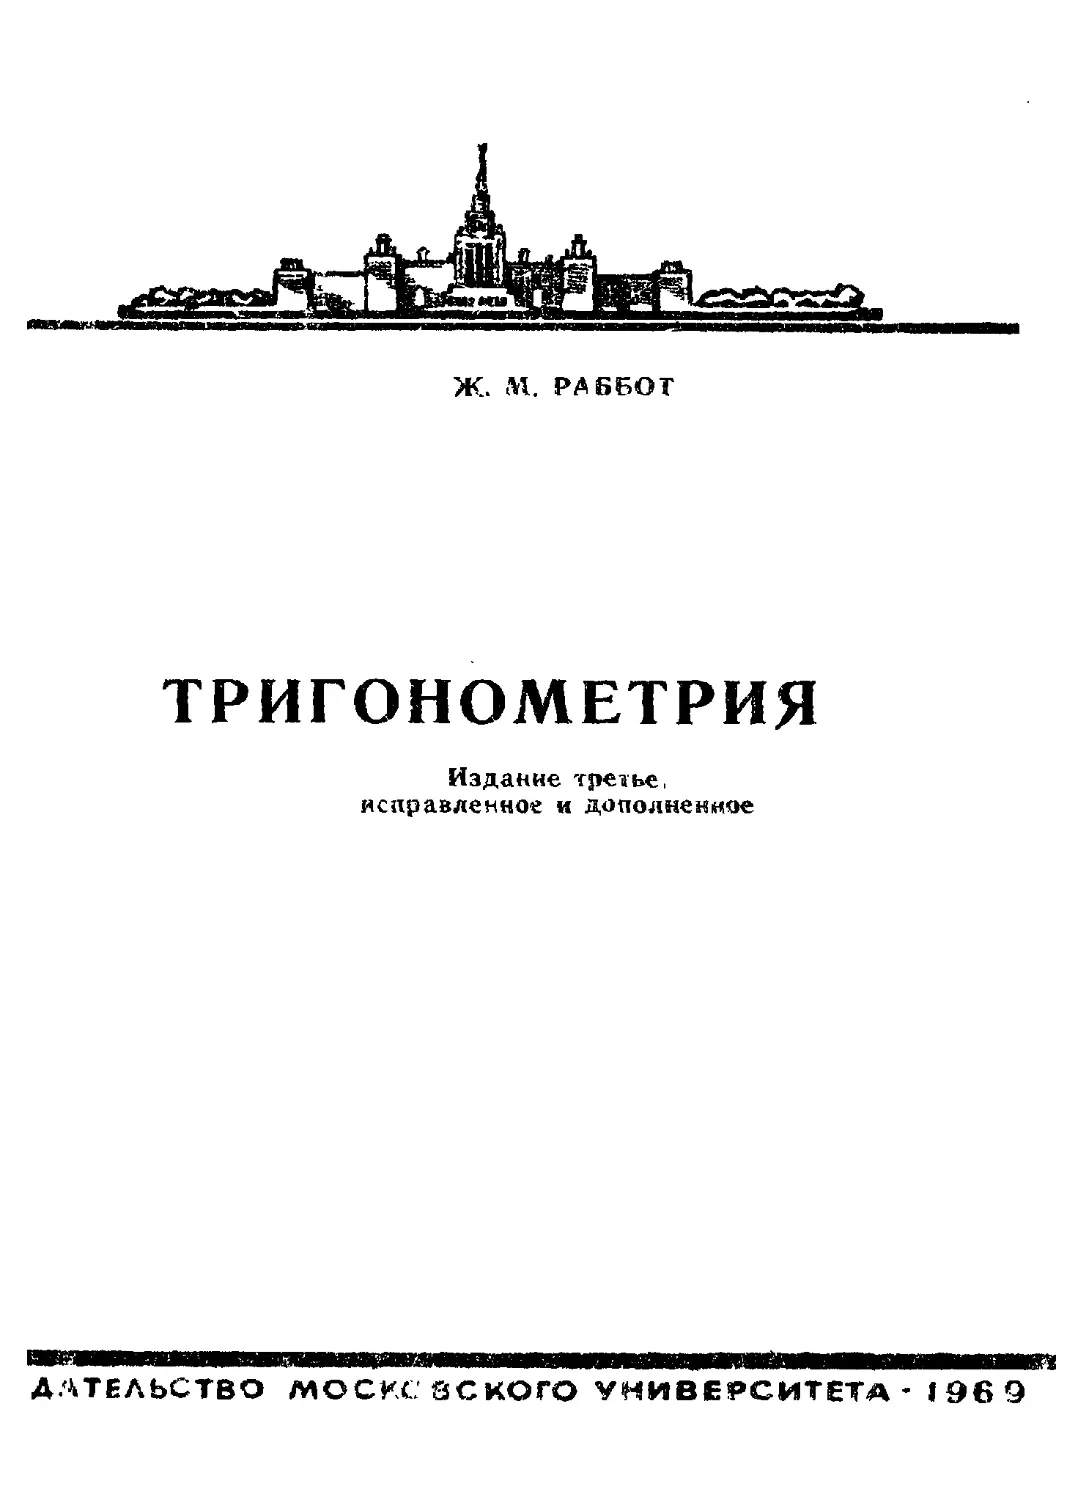 Тригонометрия. Раббот Ж.М., ЗМШ, 1969.